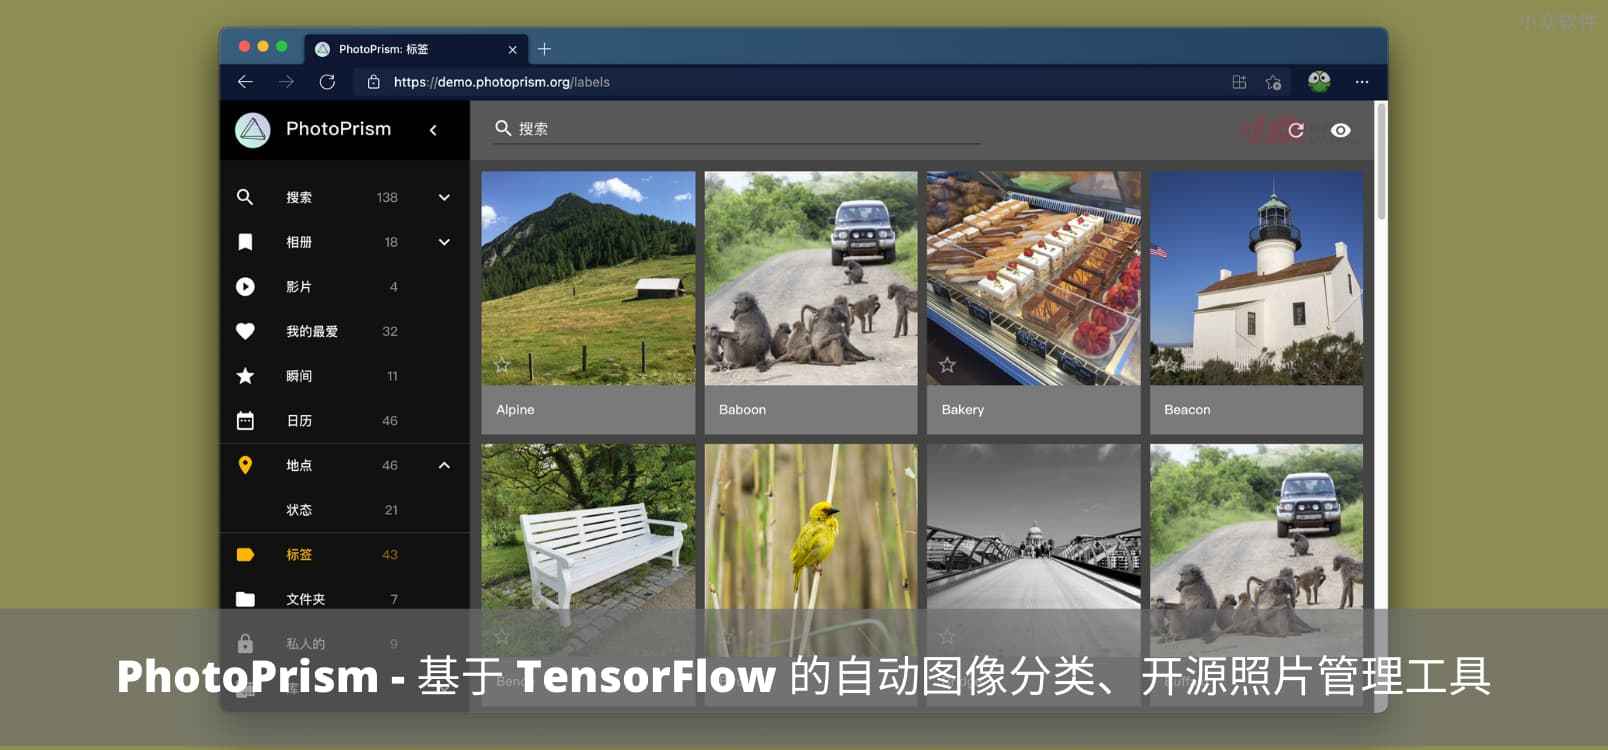 PhotoPrism - 基于机器学习 TensorFlow 的自动图像分类、开源照片管理工具